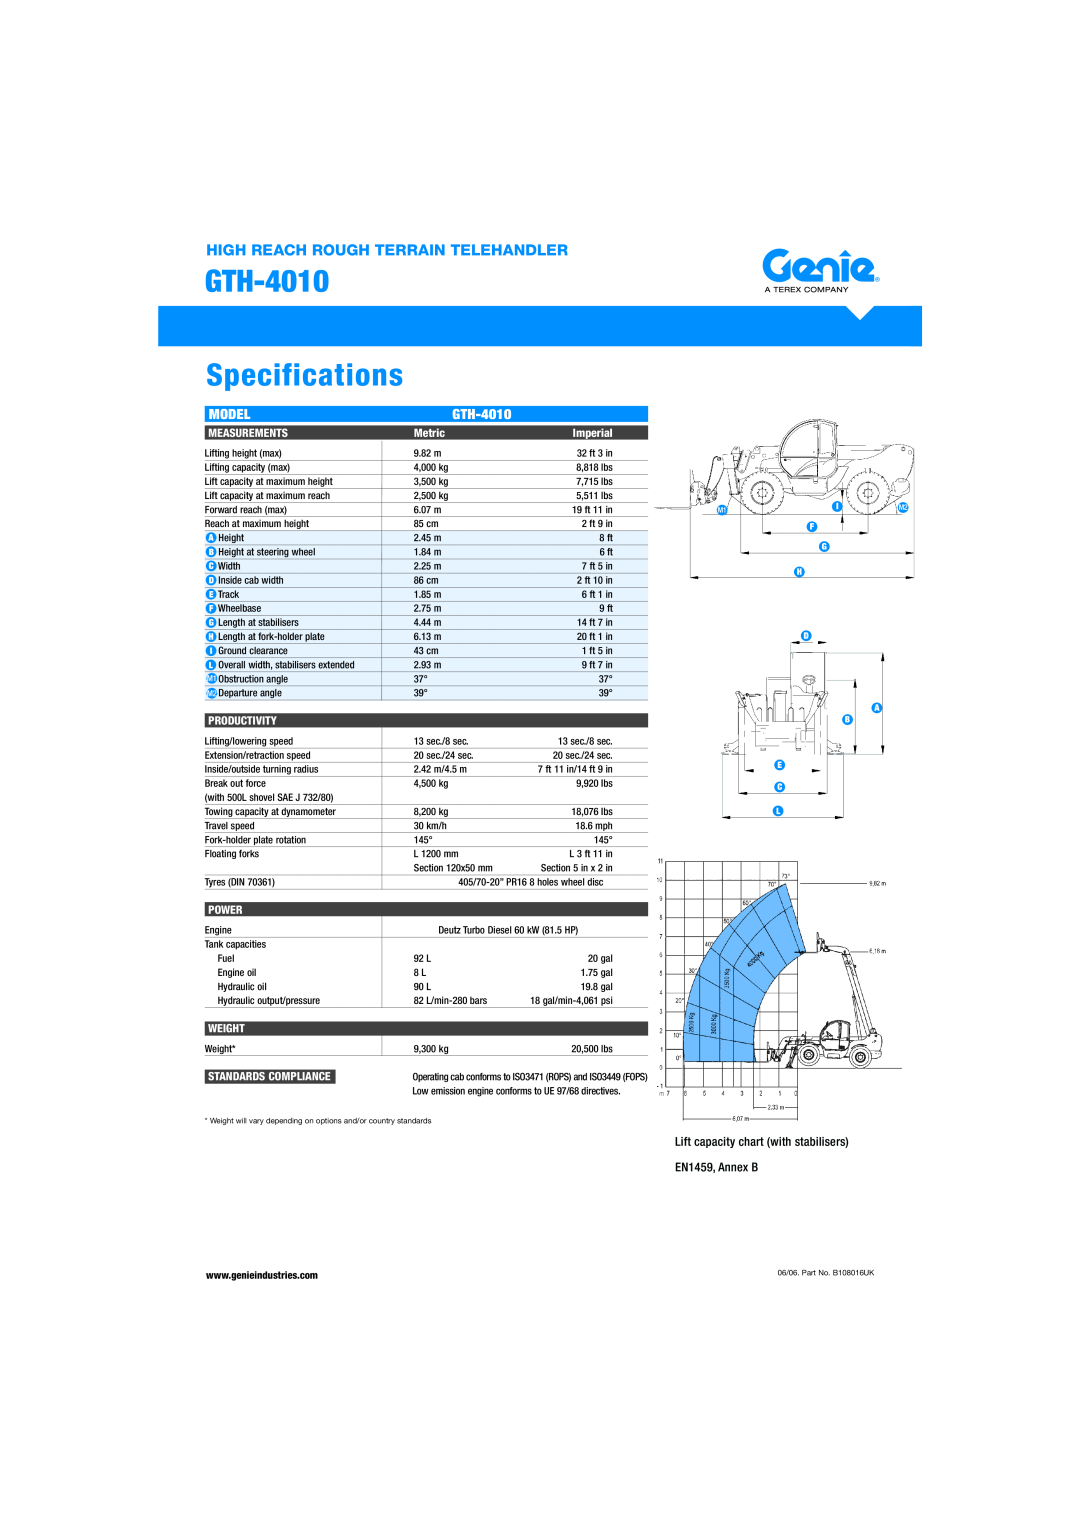 Genie B108016UK specifications GTH-4010, Specifications, High Reach Rough Terrain Telehandler, Model, EN1459, Annex B 